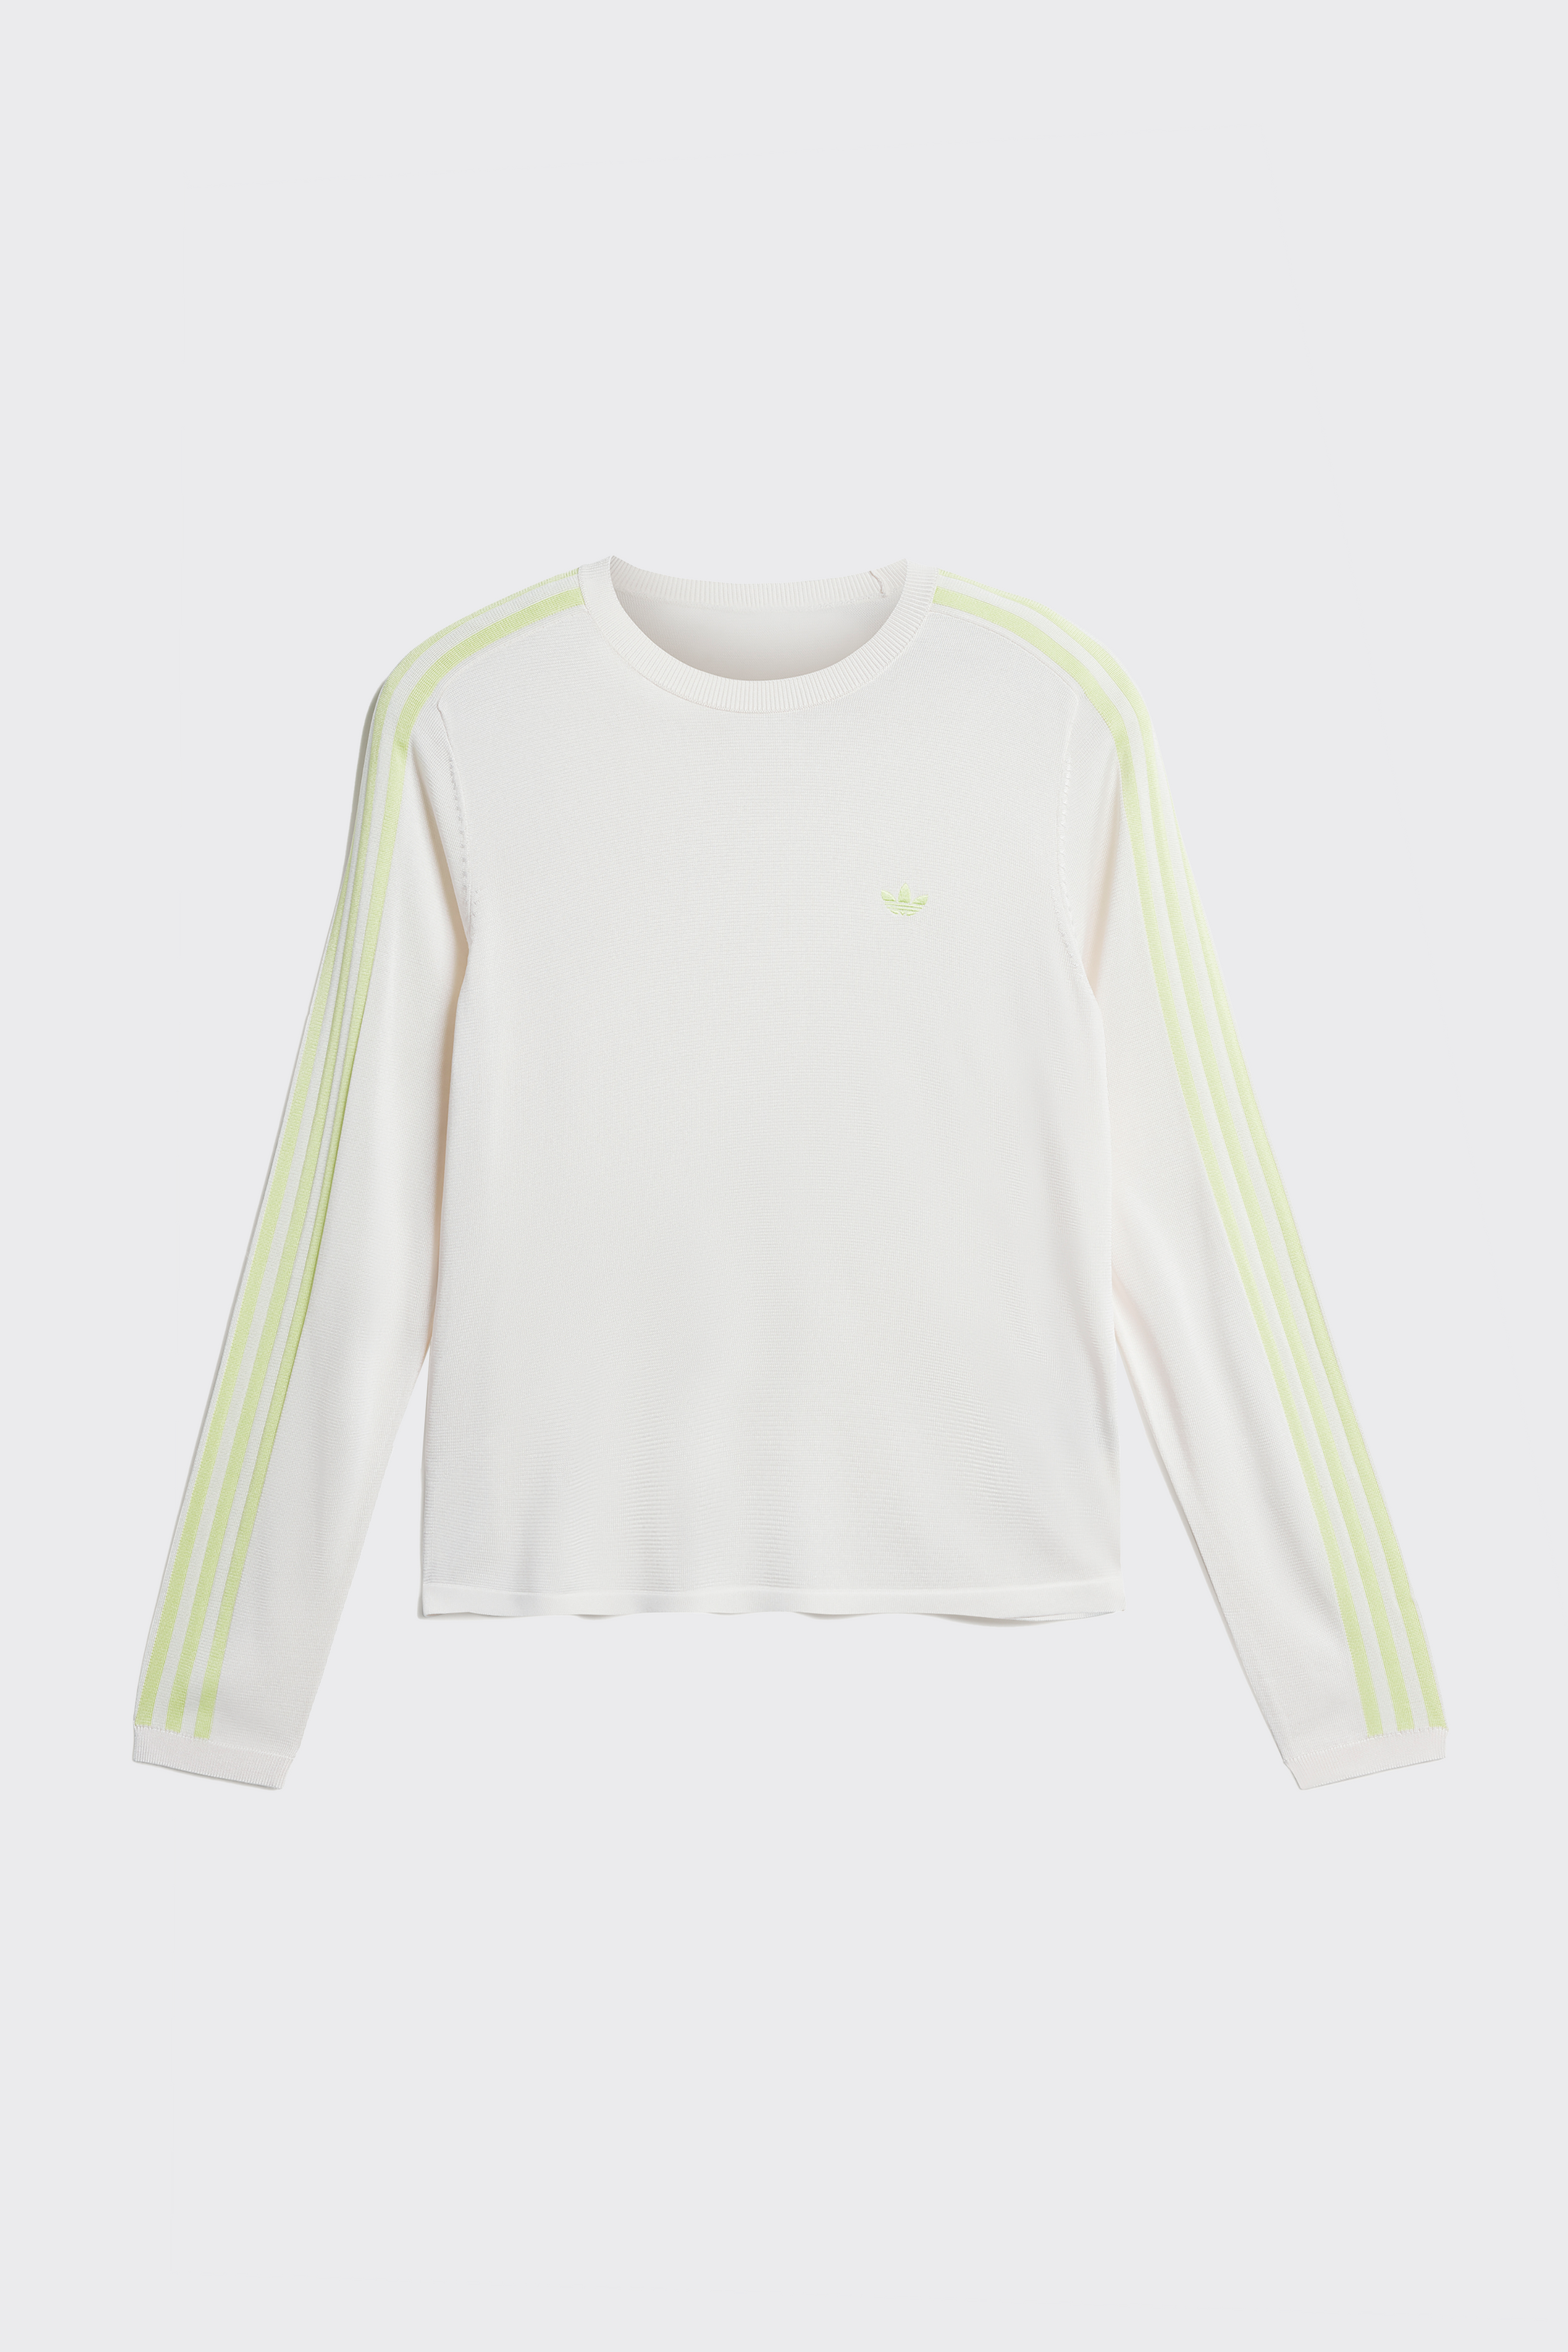 Adidas Originals by Wales Bonner Long Sleeve Knit T Shirt